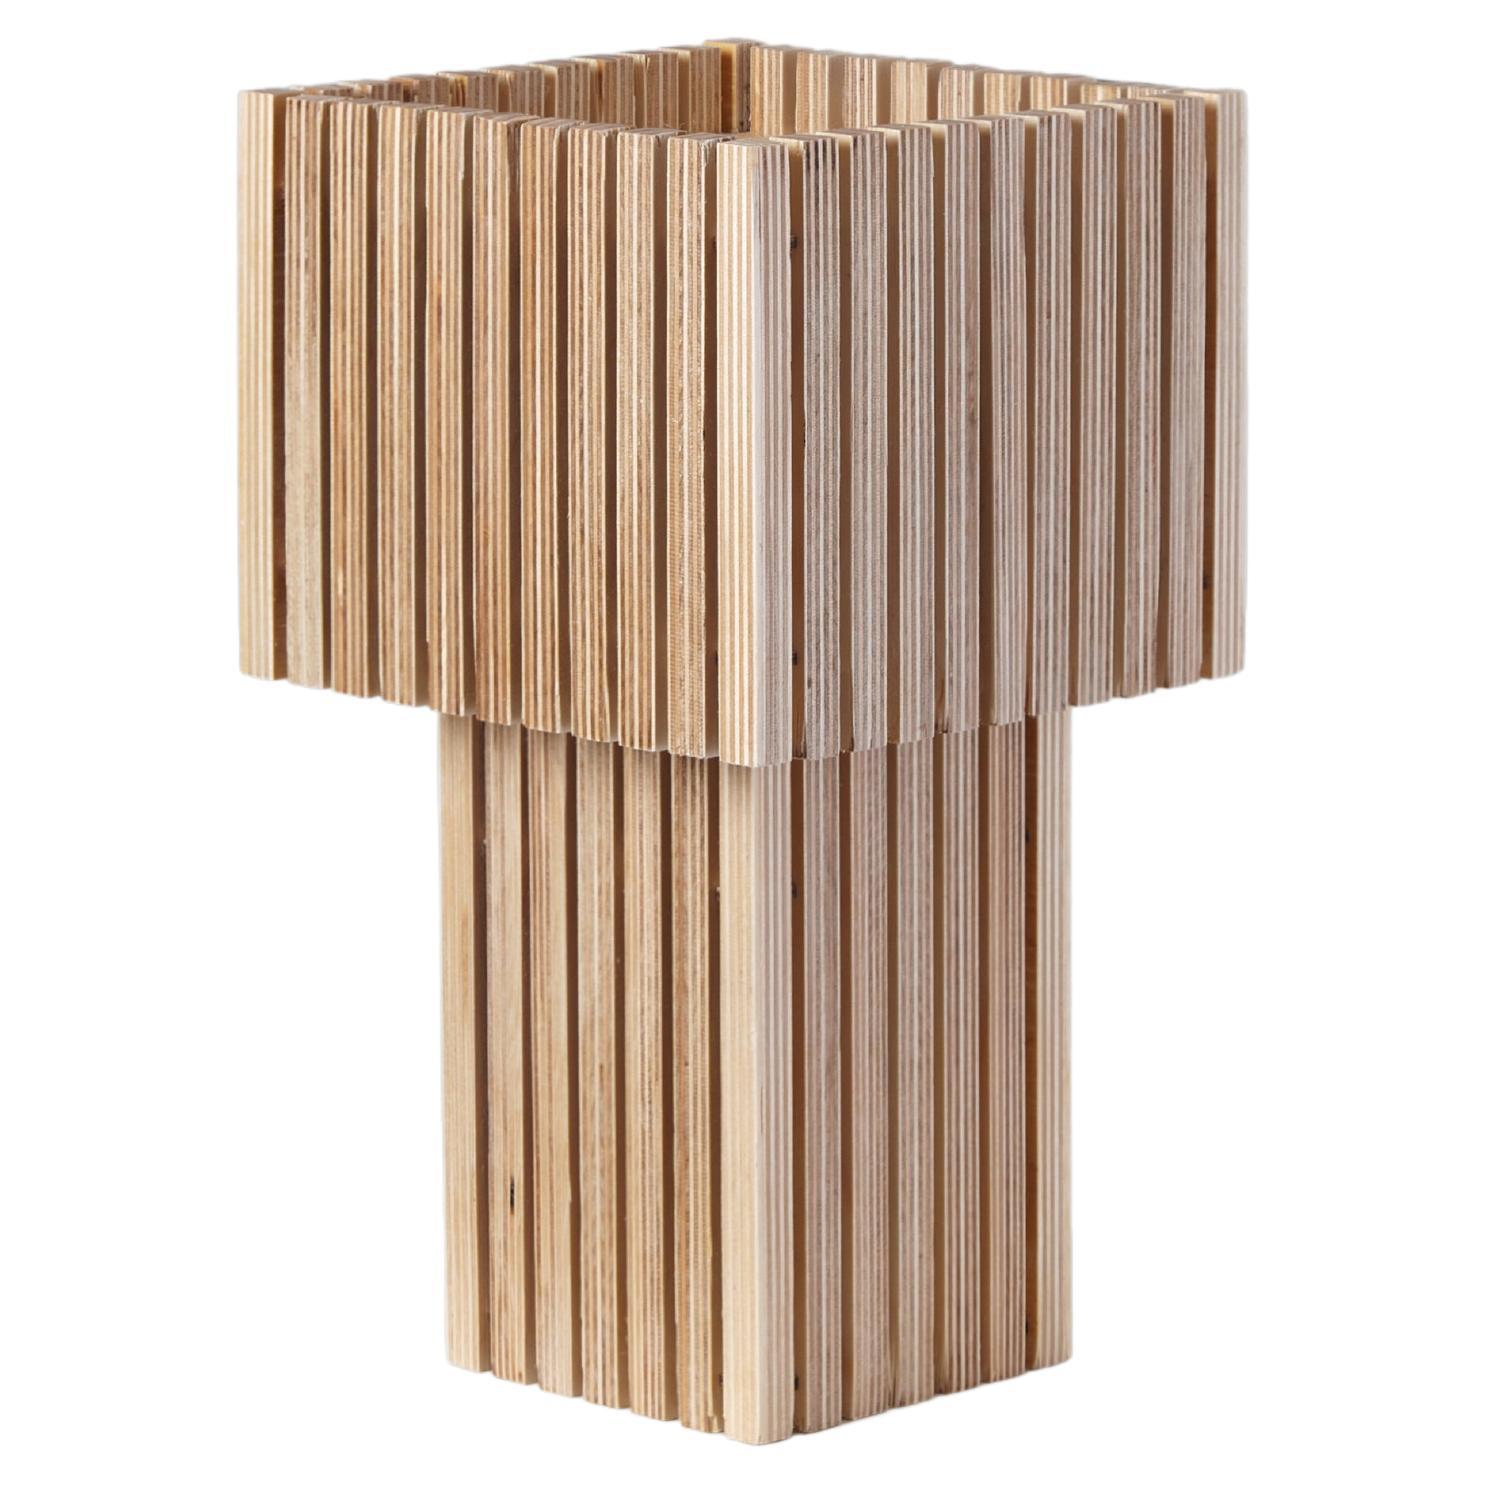 Parállilo Table Lamp in Plywood